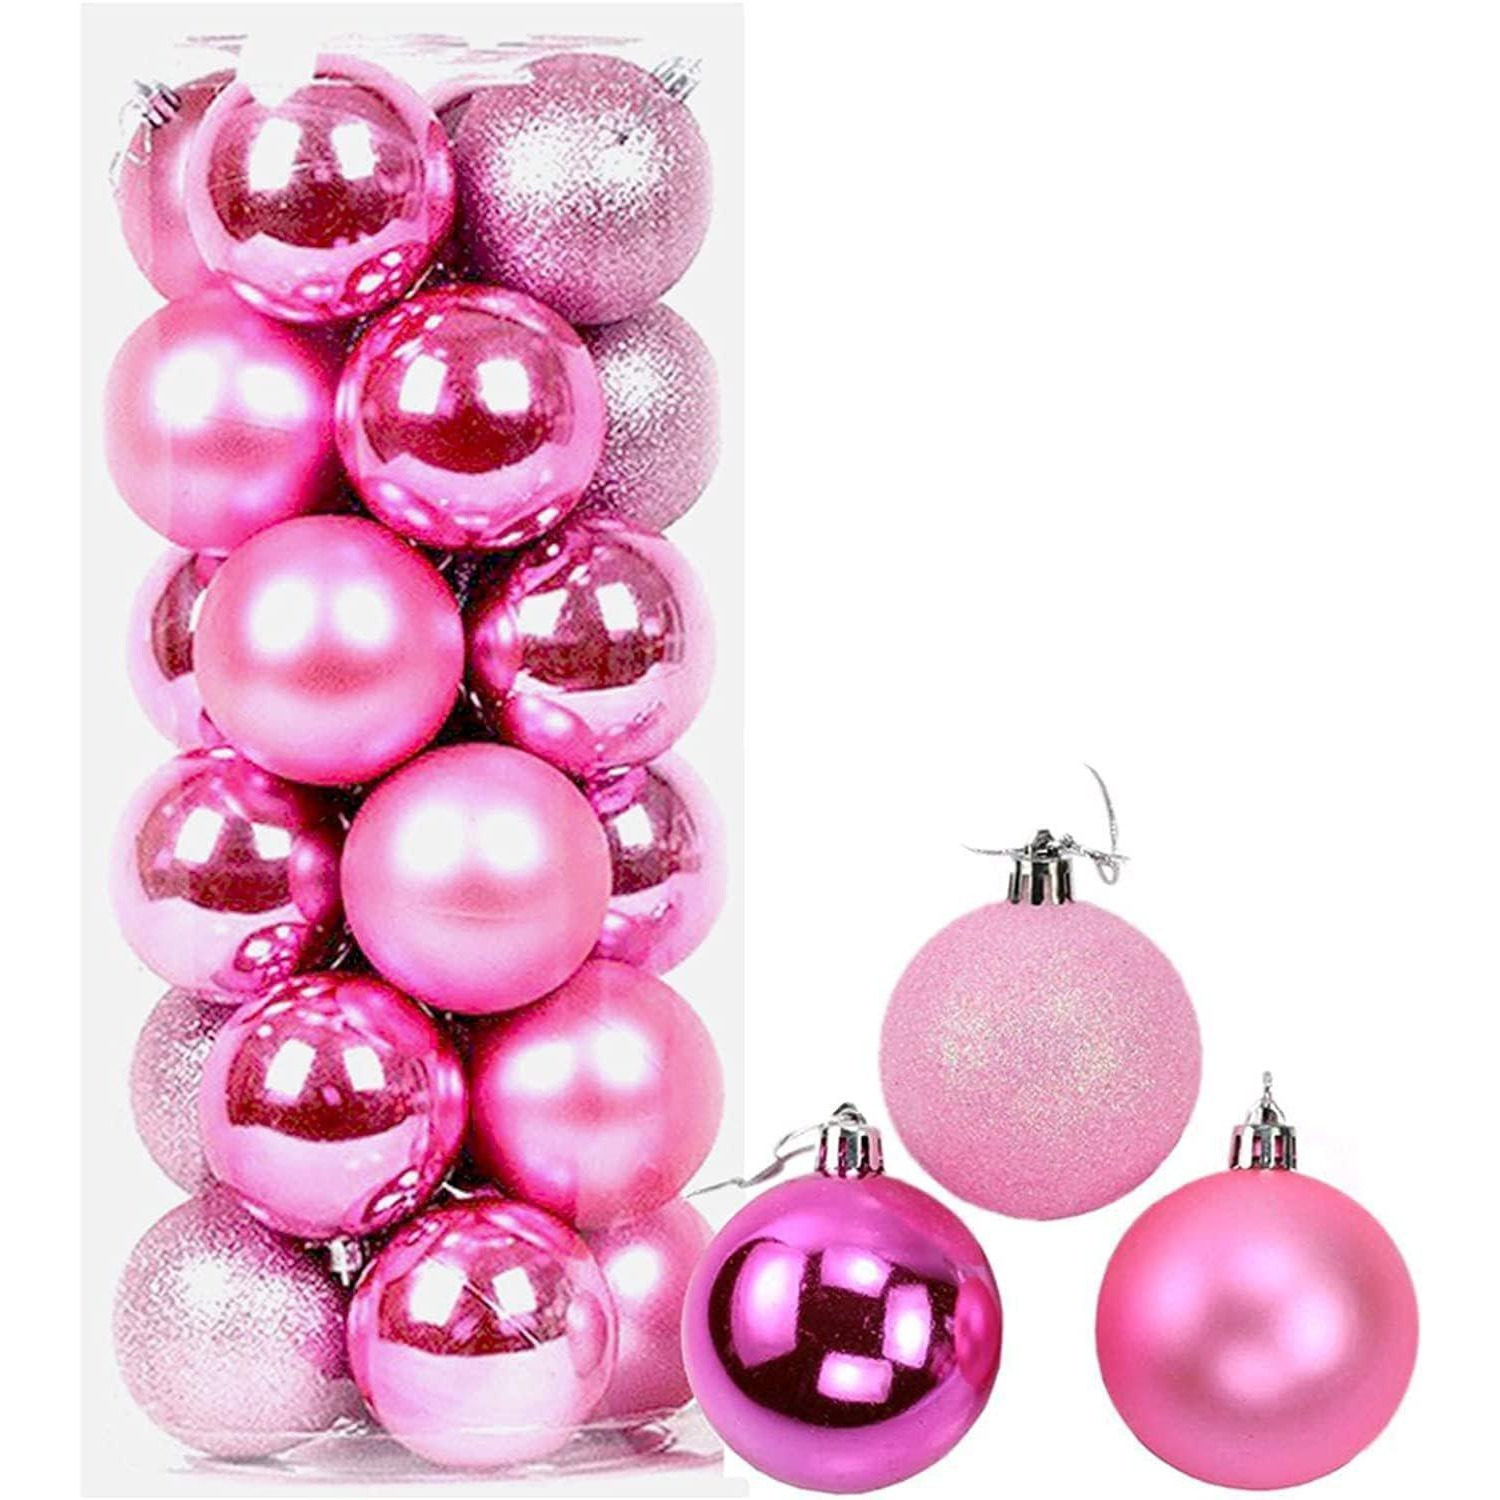 60mm/18Pcs Christmas Baubles Shatterproof Pale Pink,Tree Decorations - image 1